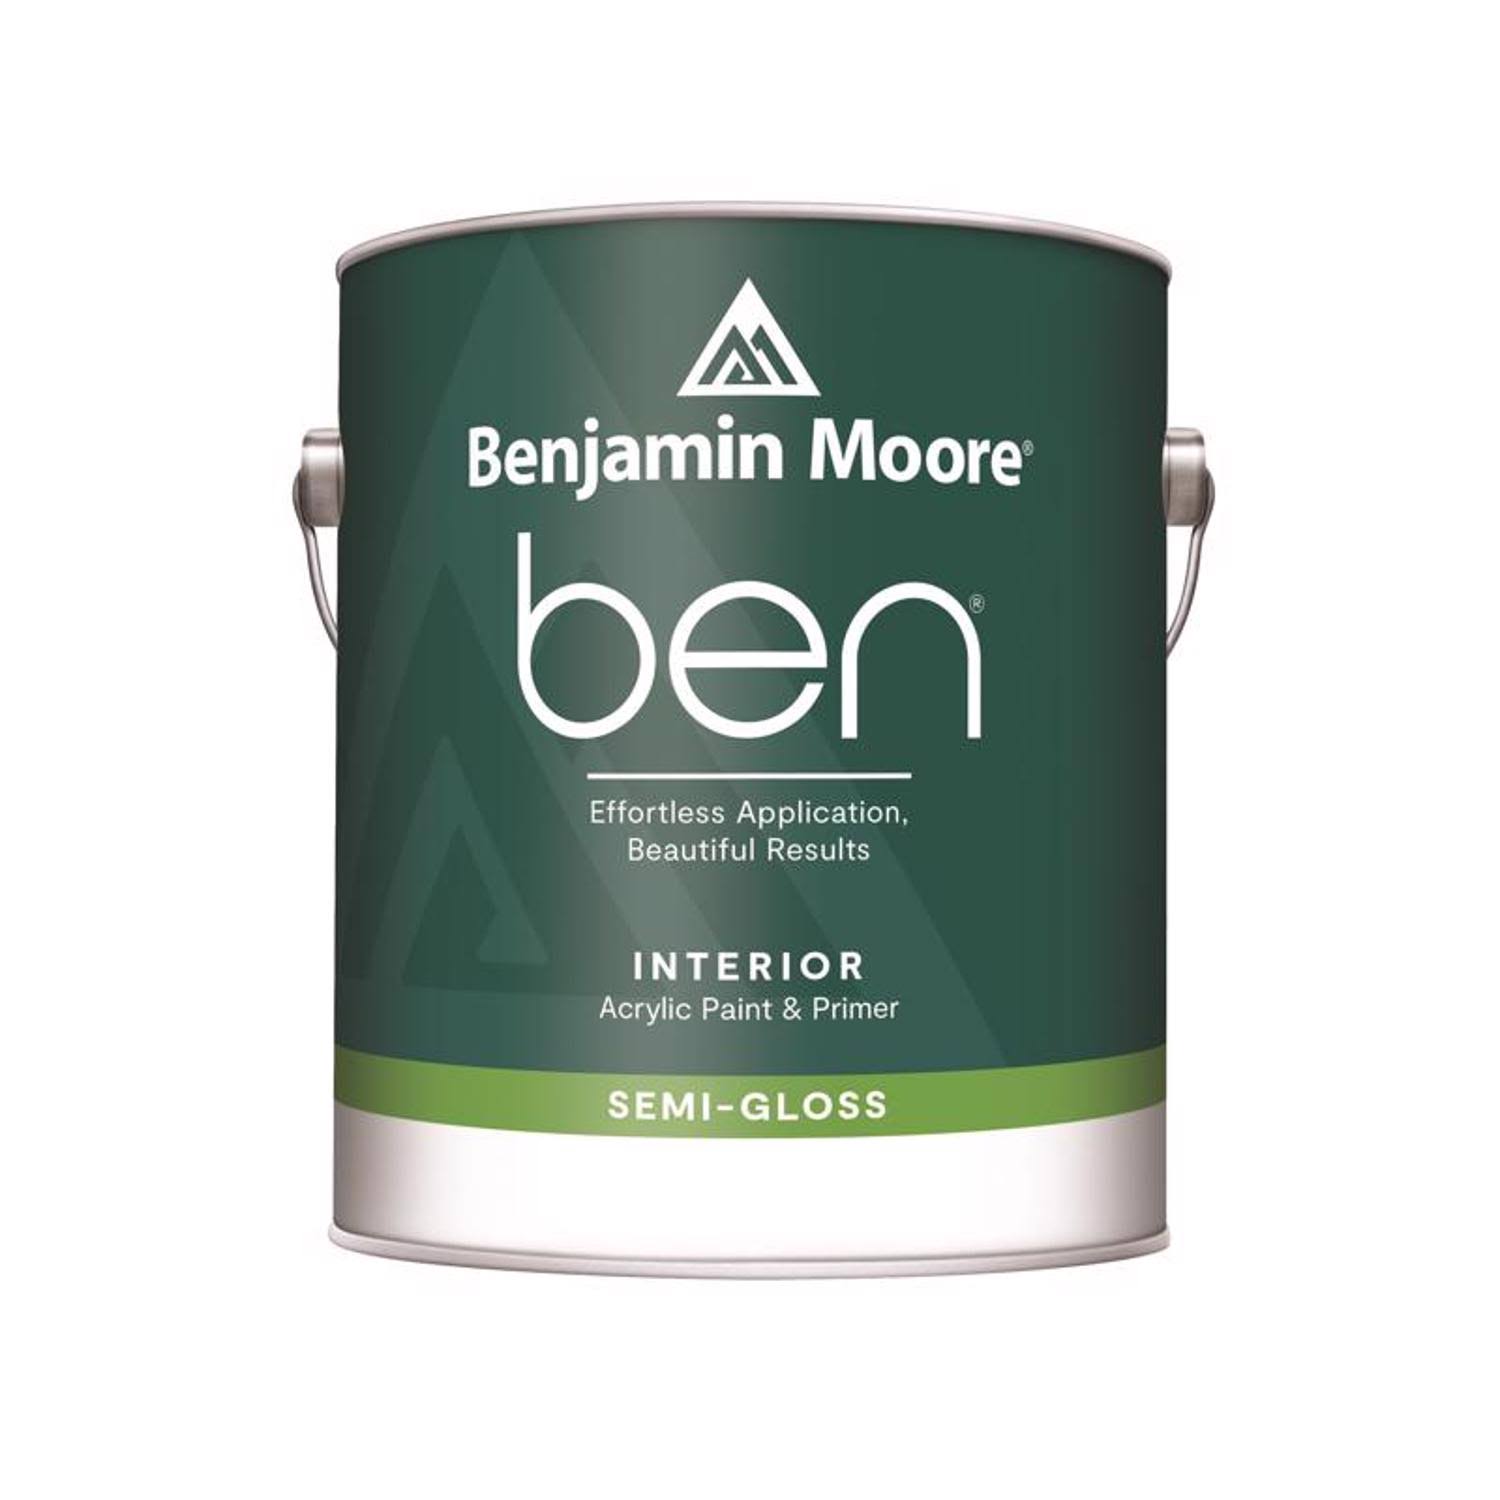 Benjamin Moore - Ben Interior Paint - Semi-Gloss (N627) - Gallon / White